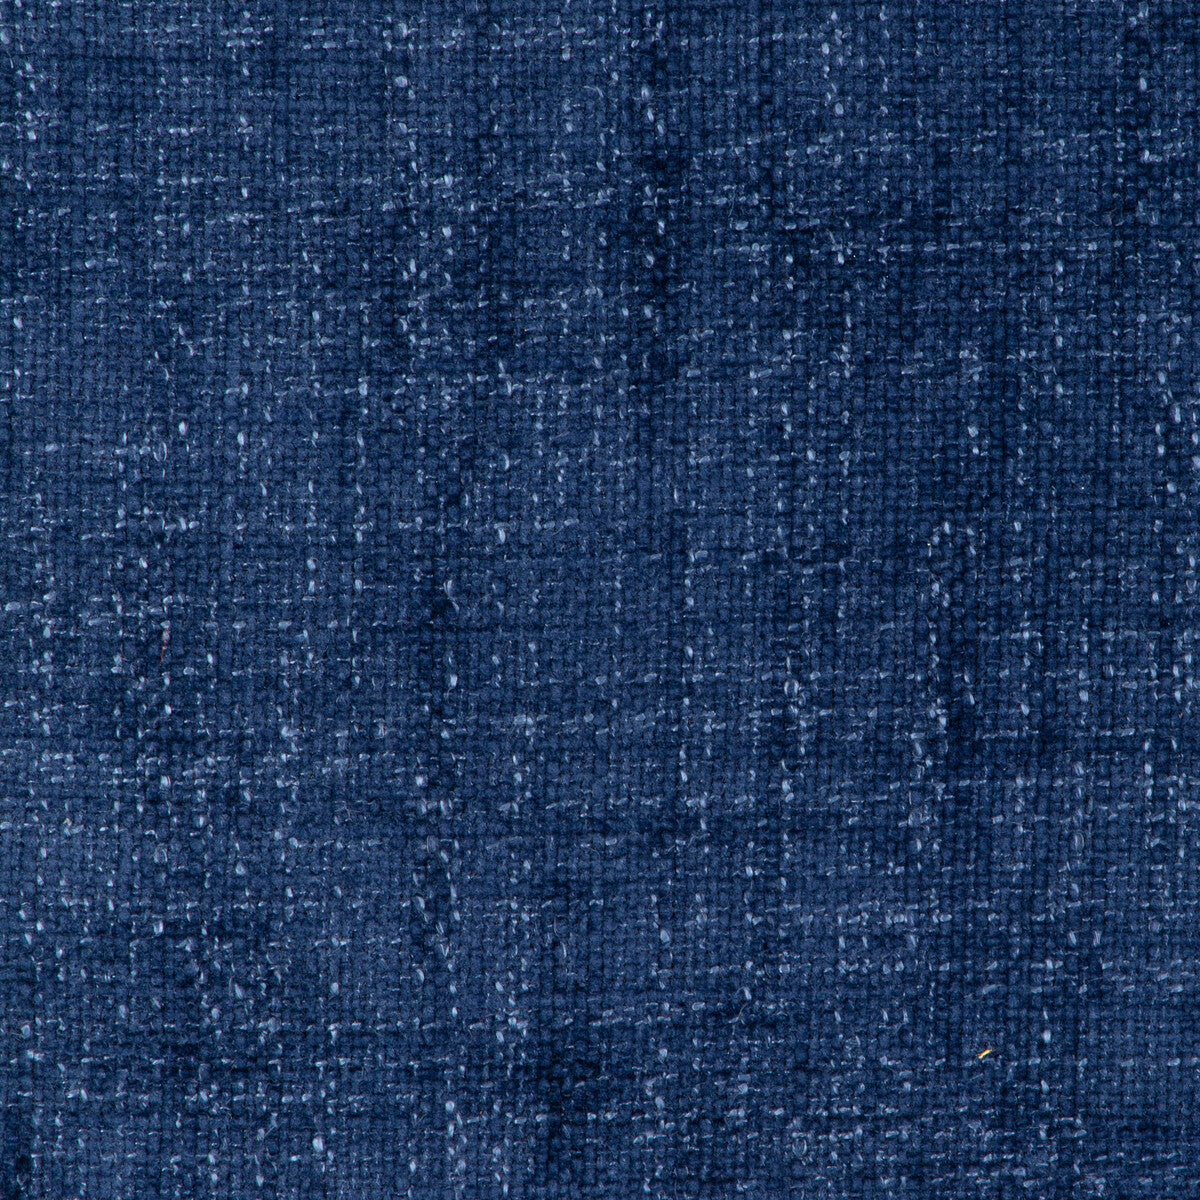 Kravet Smart fabric in 36677-50 color - pattern 36677.50.0 - by Kravet Smart in the Performance Kravetarmor collection